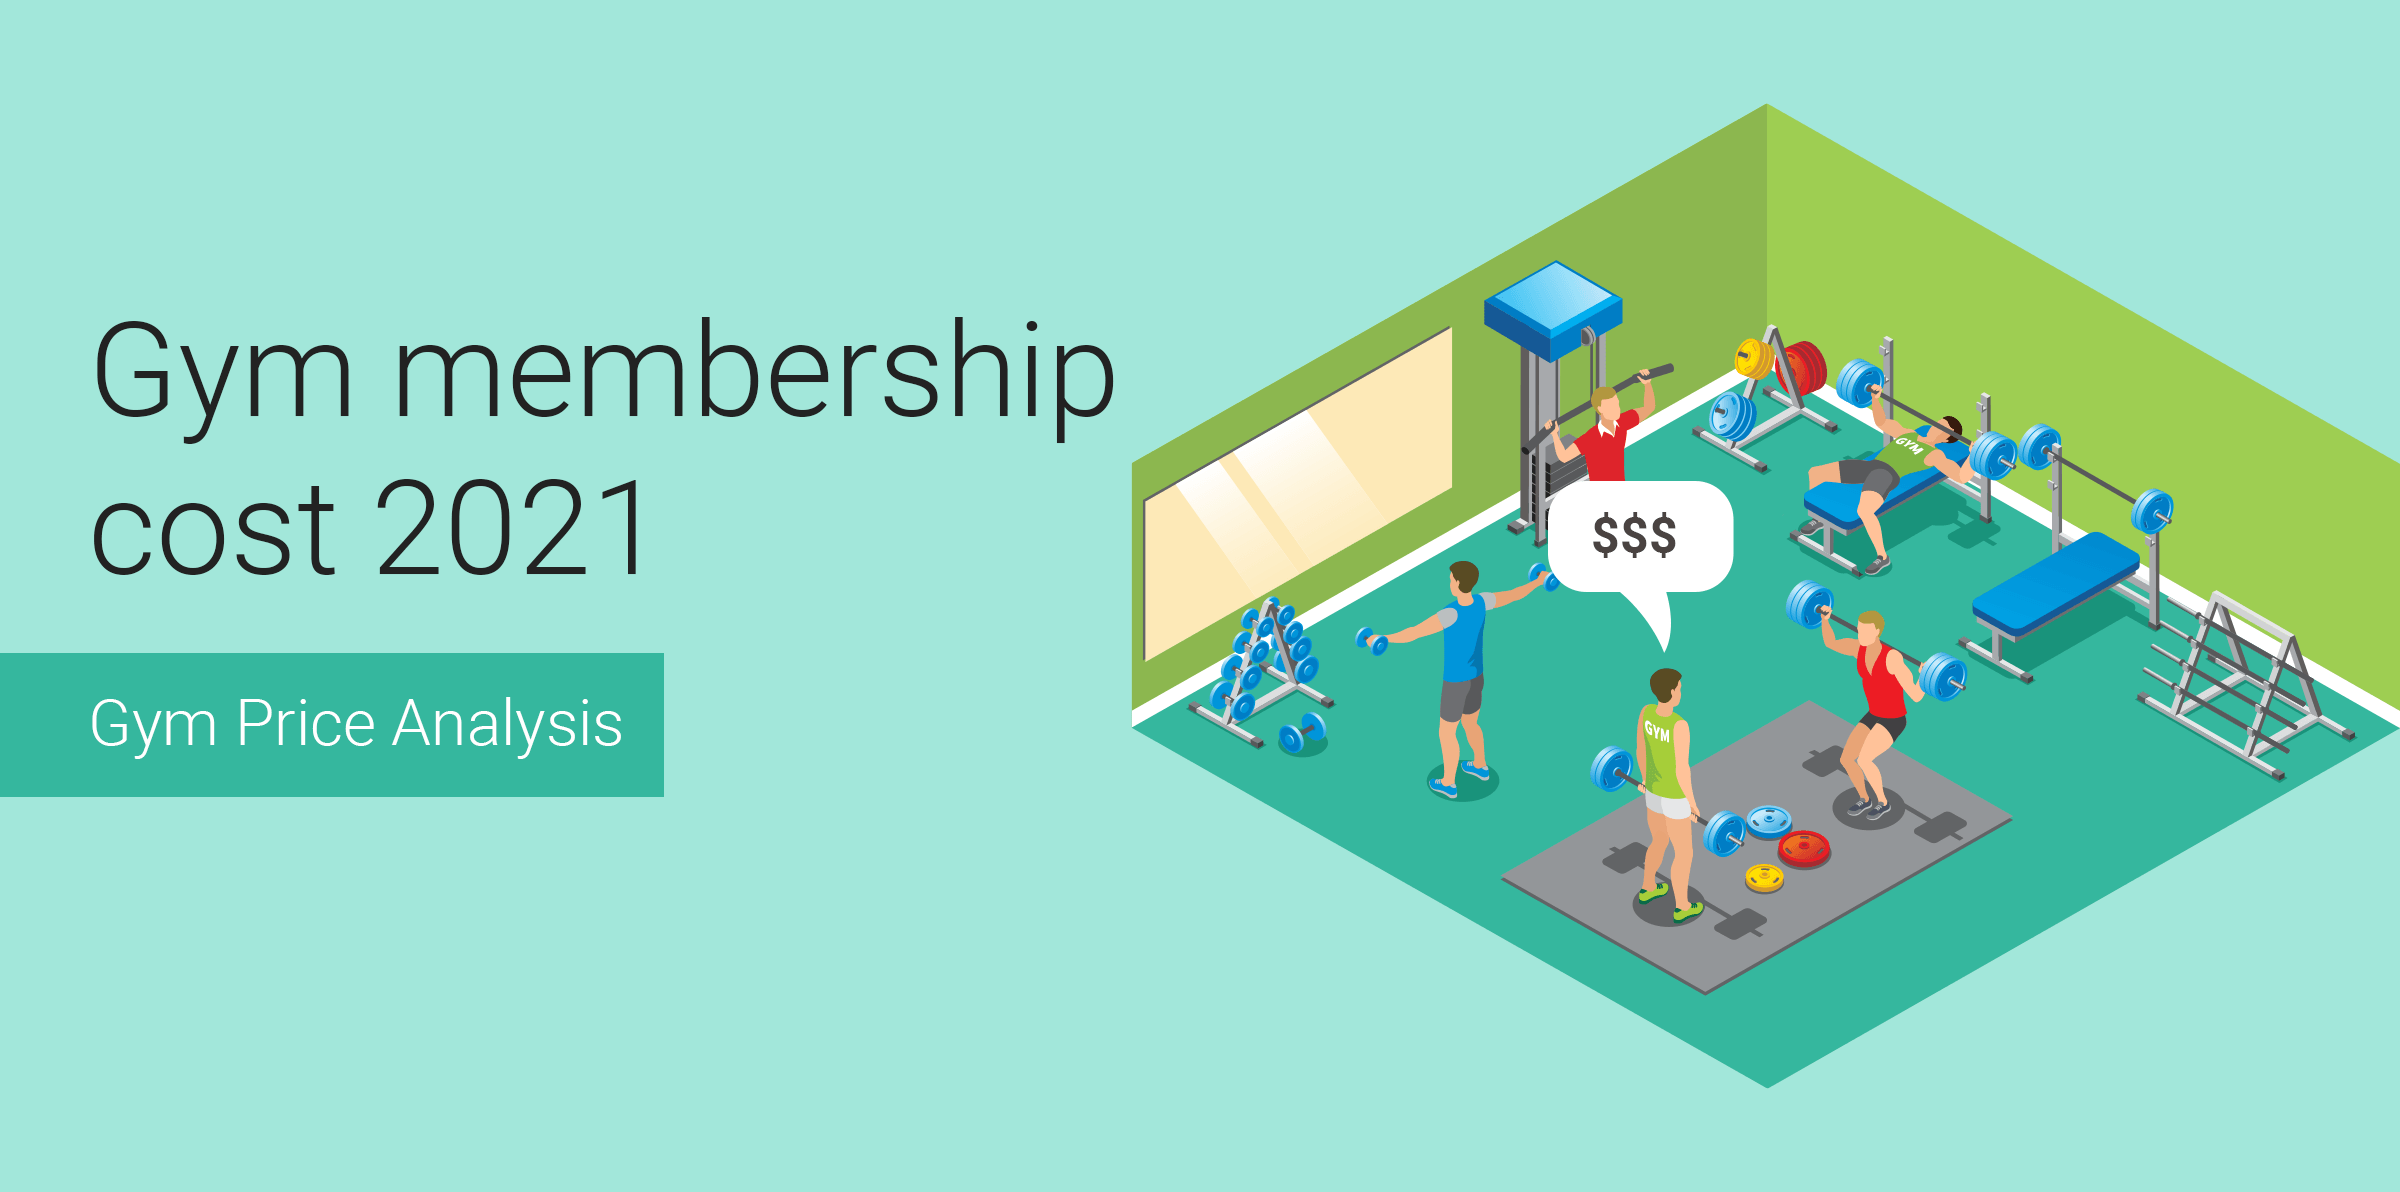 Average Gym Membership Cost 2021